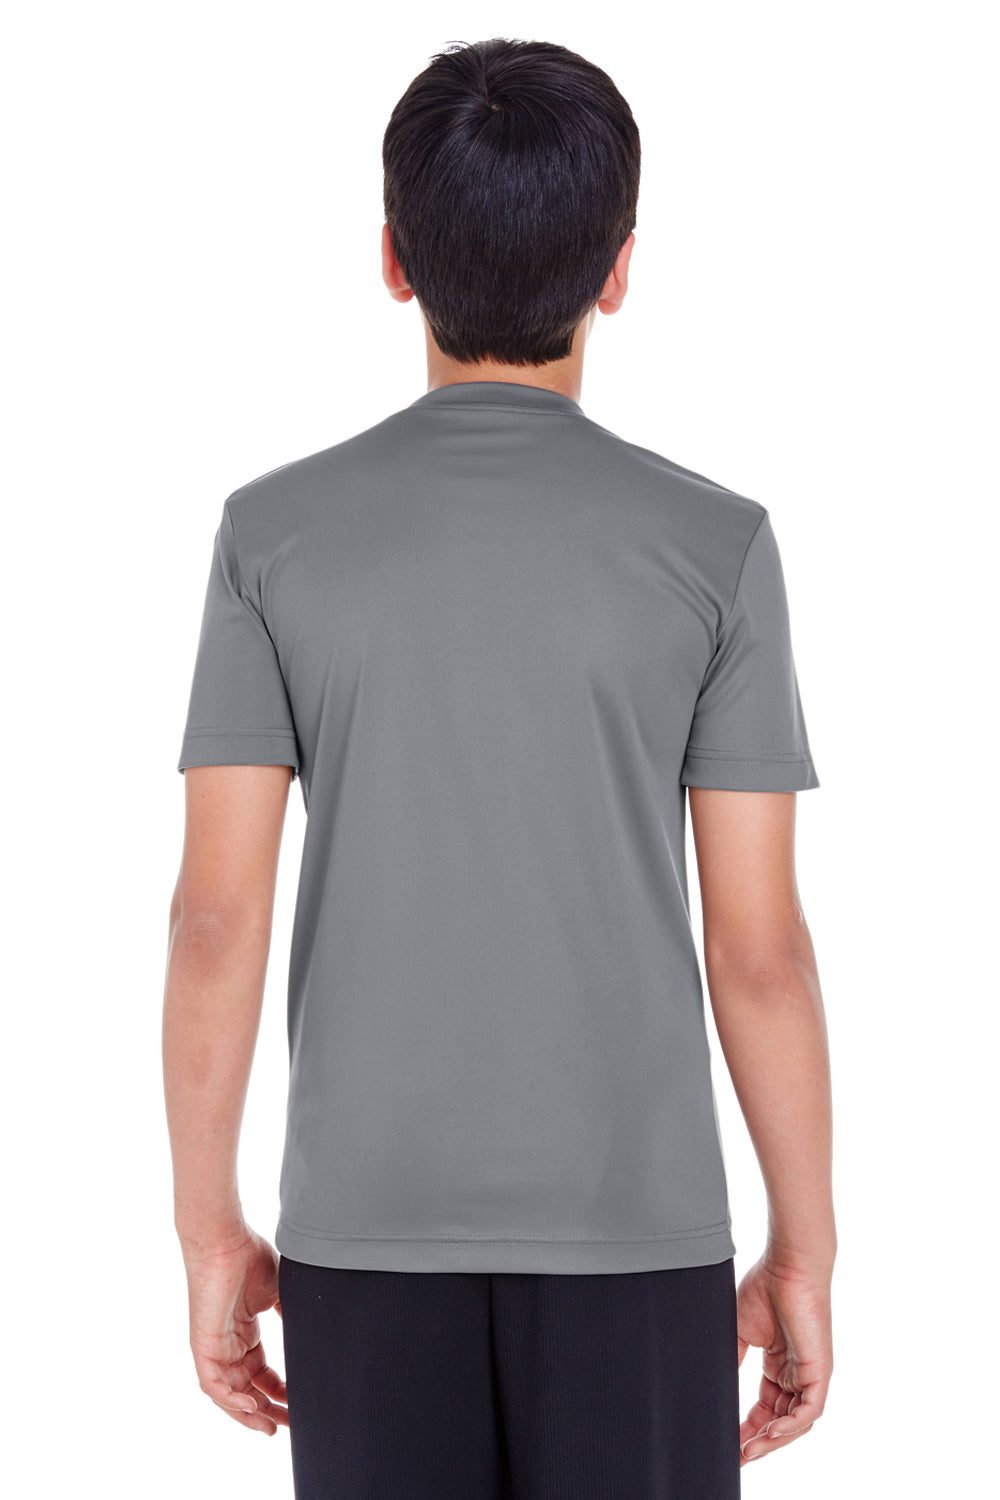 Team 365 TT11Y Youth Zone Performance Moisture Wicking Short Sleeve Crewneck T-Shirt Graphite Grey Back